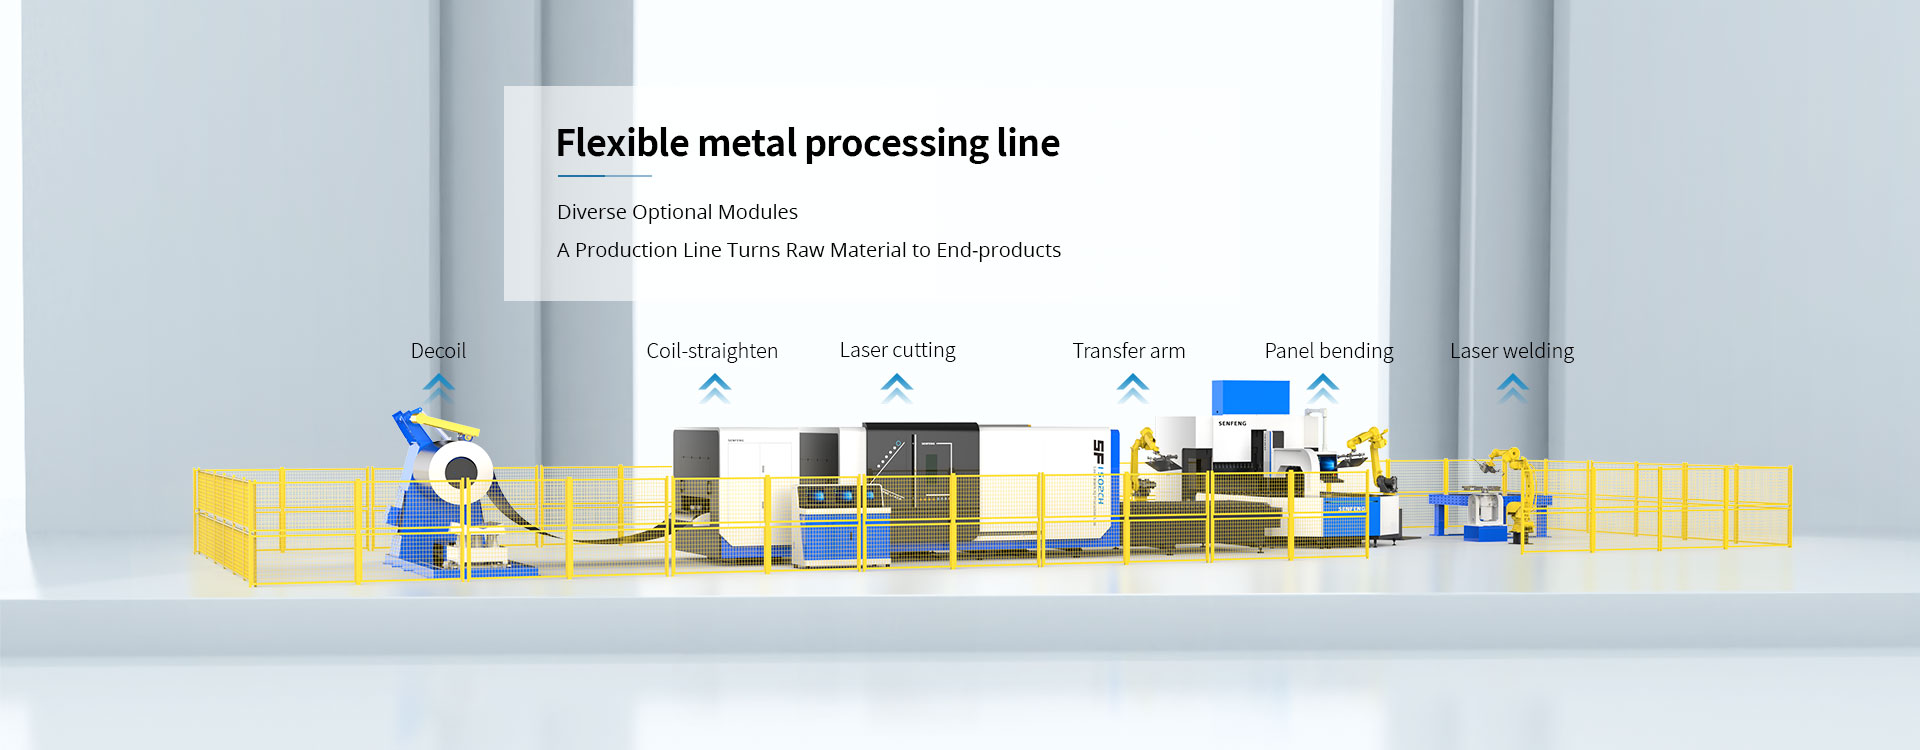 Flexible Metal Processing Line